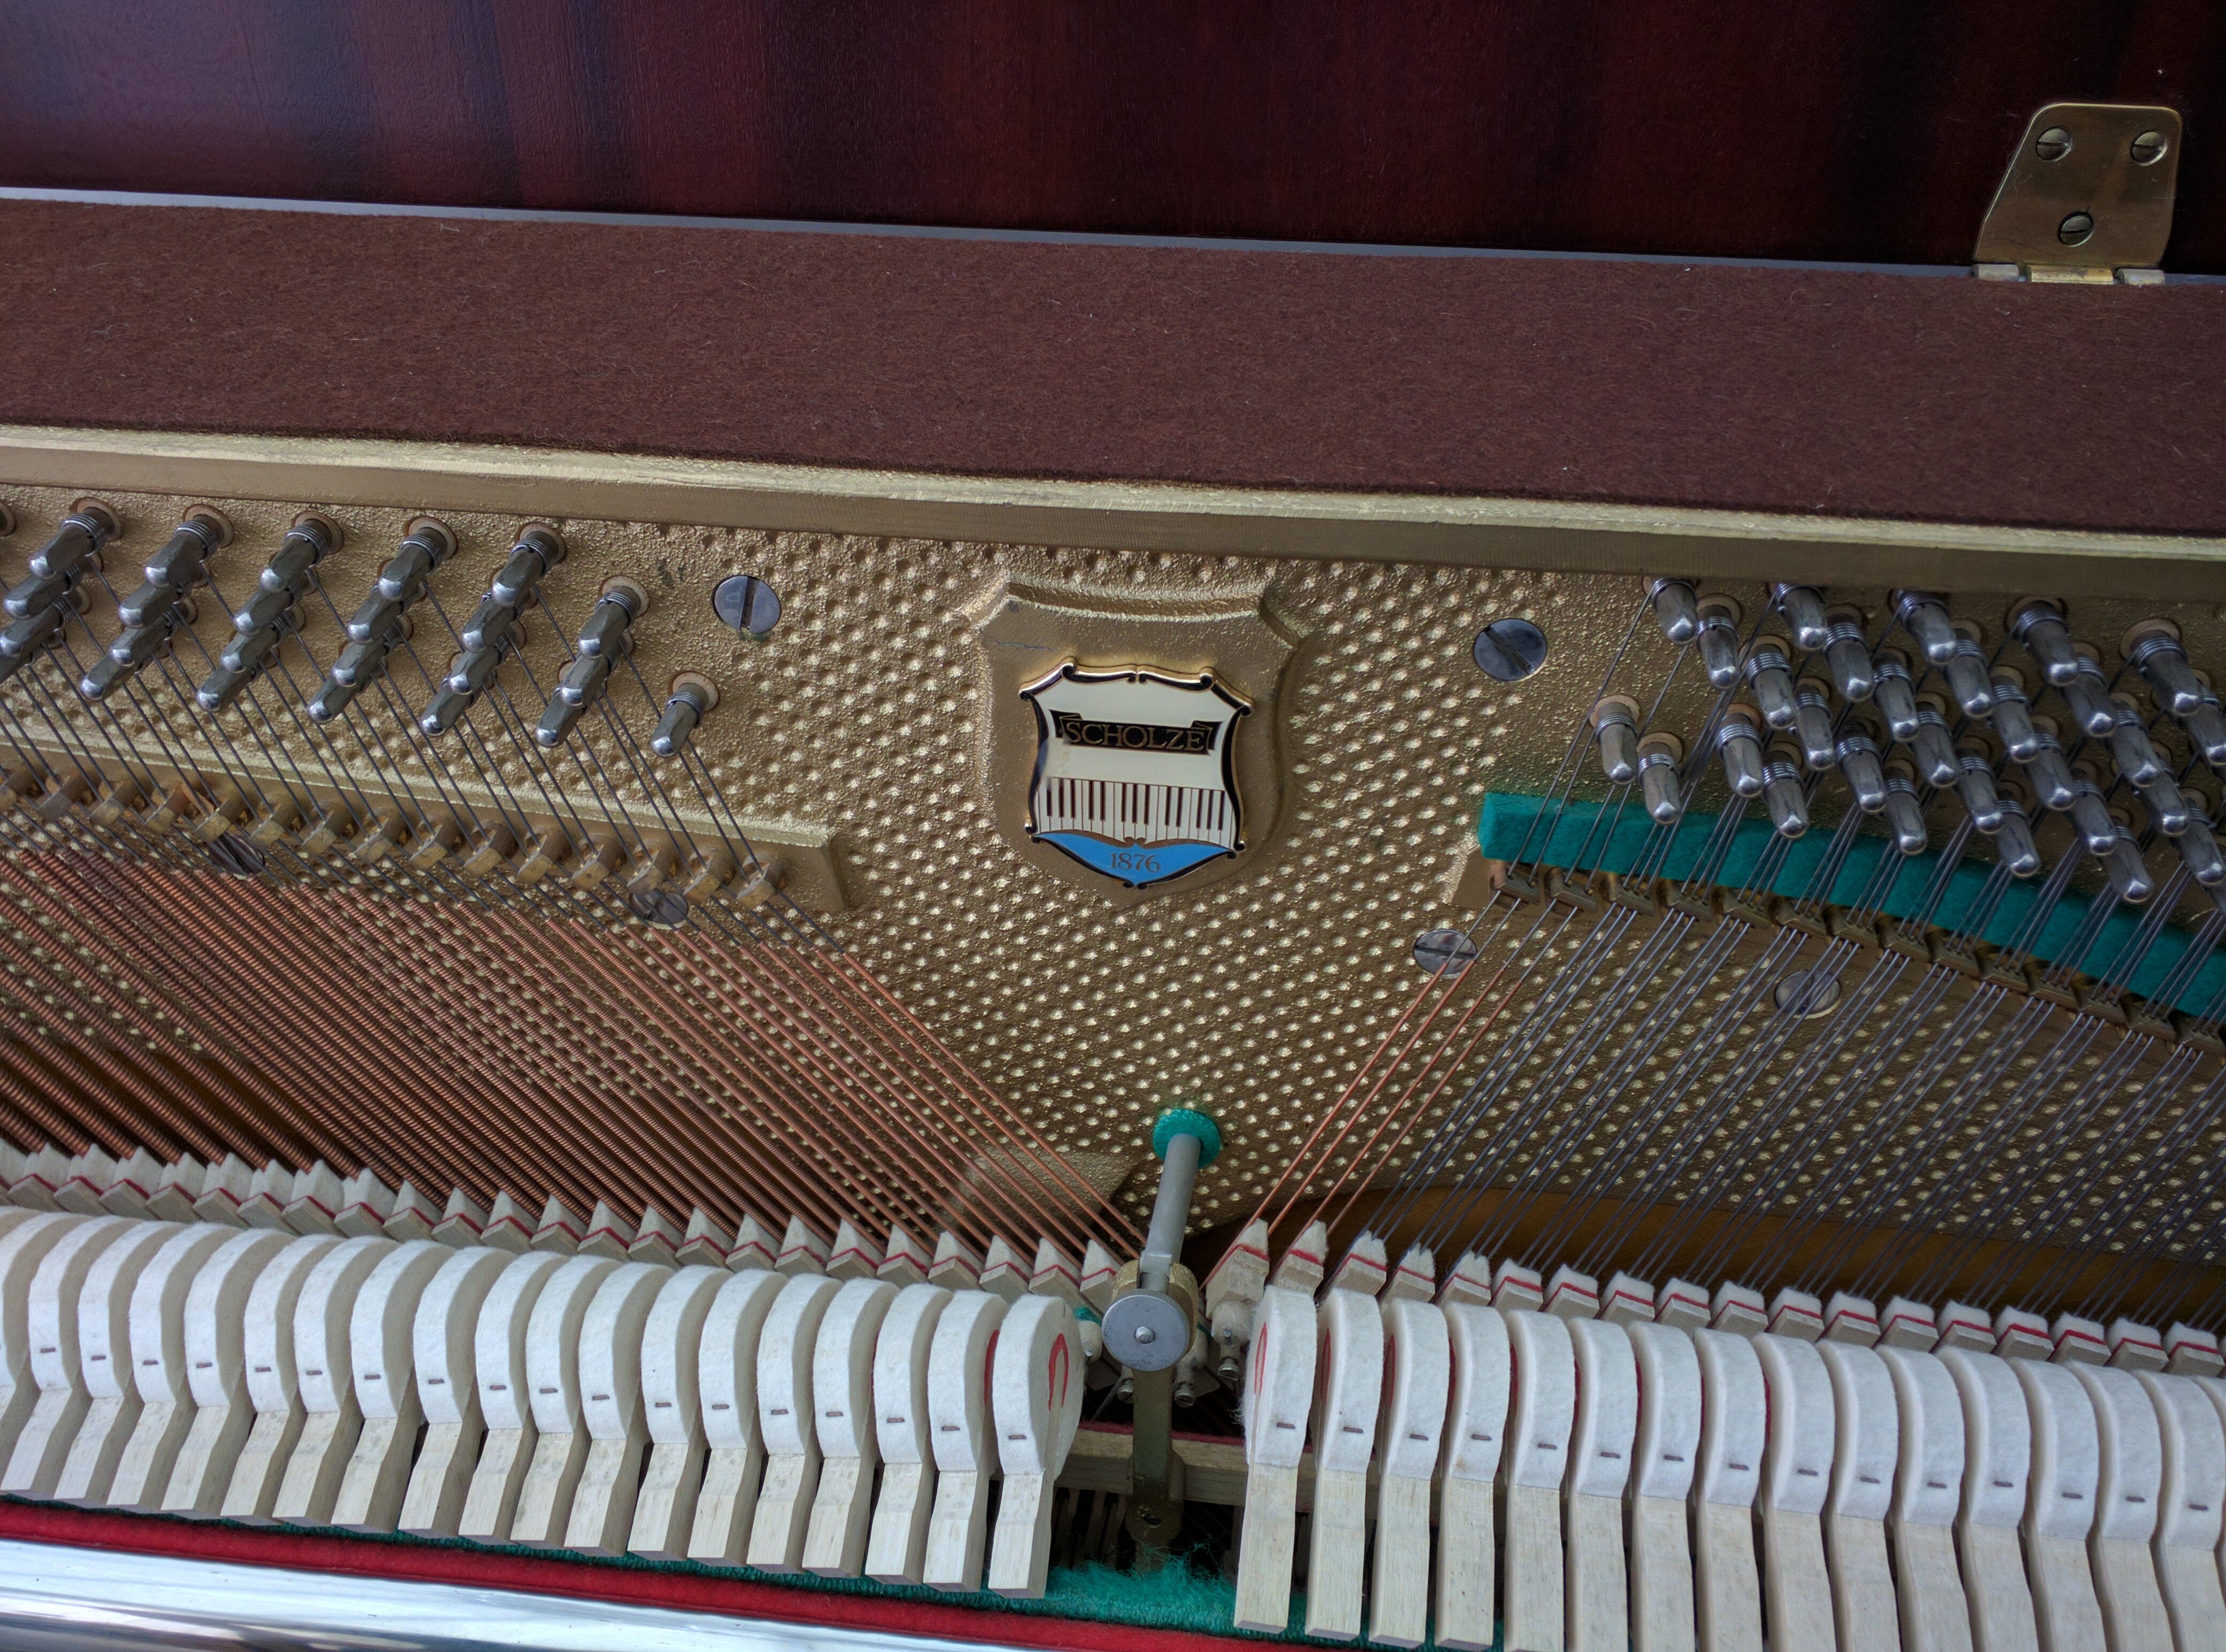 Close Up of internals of Scholze Upright Piano (petrof trademark badge)